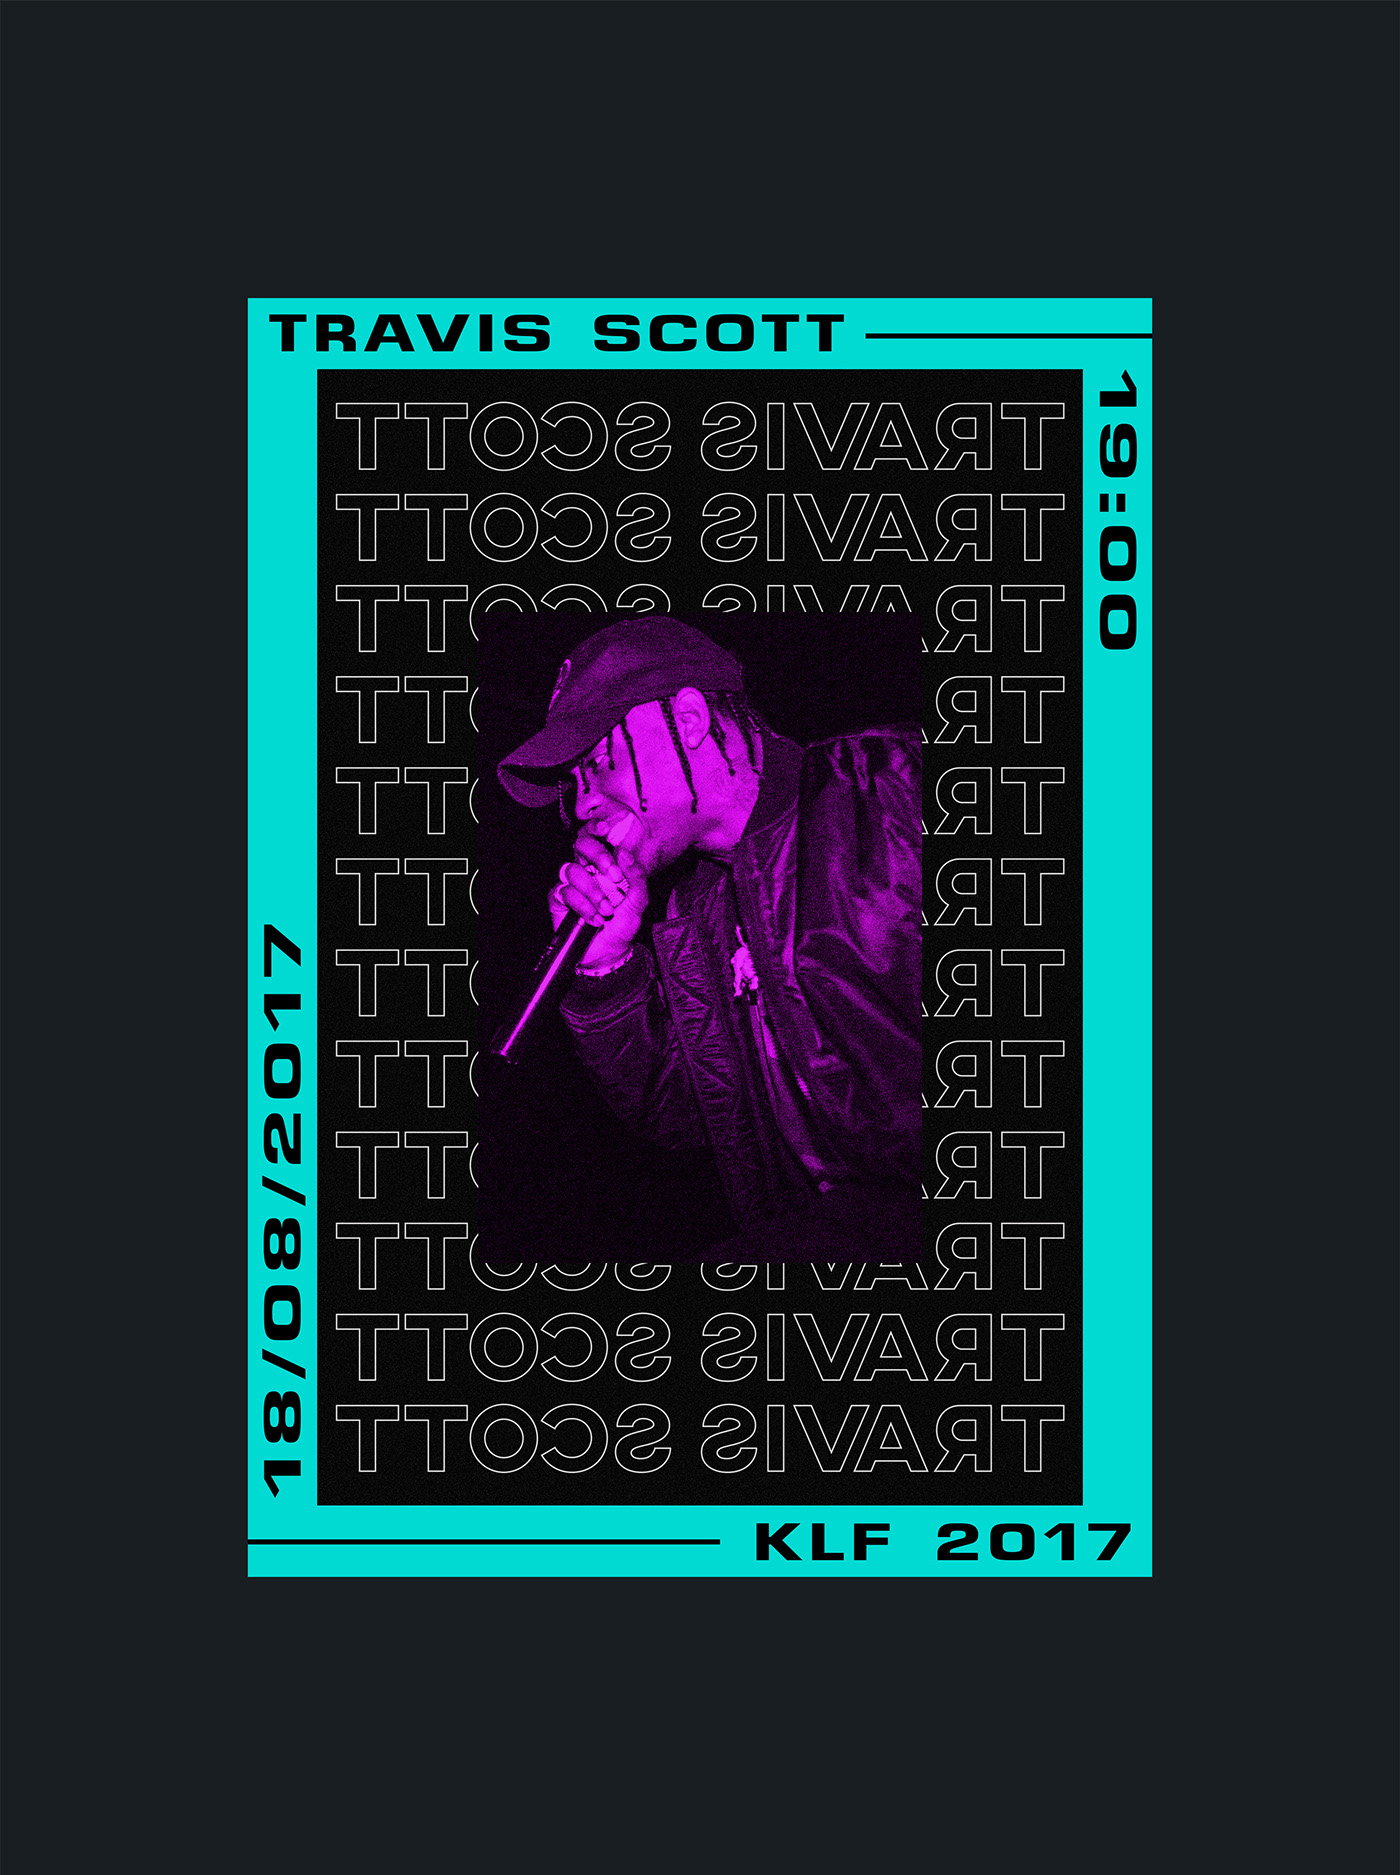 TRAVIS SCOTT poster concert concert poster rap festival graphics Music Festival astroworld rodeo